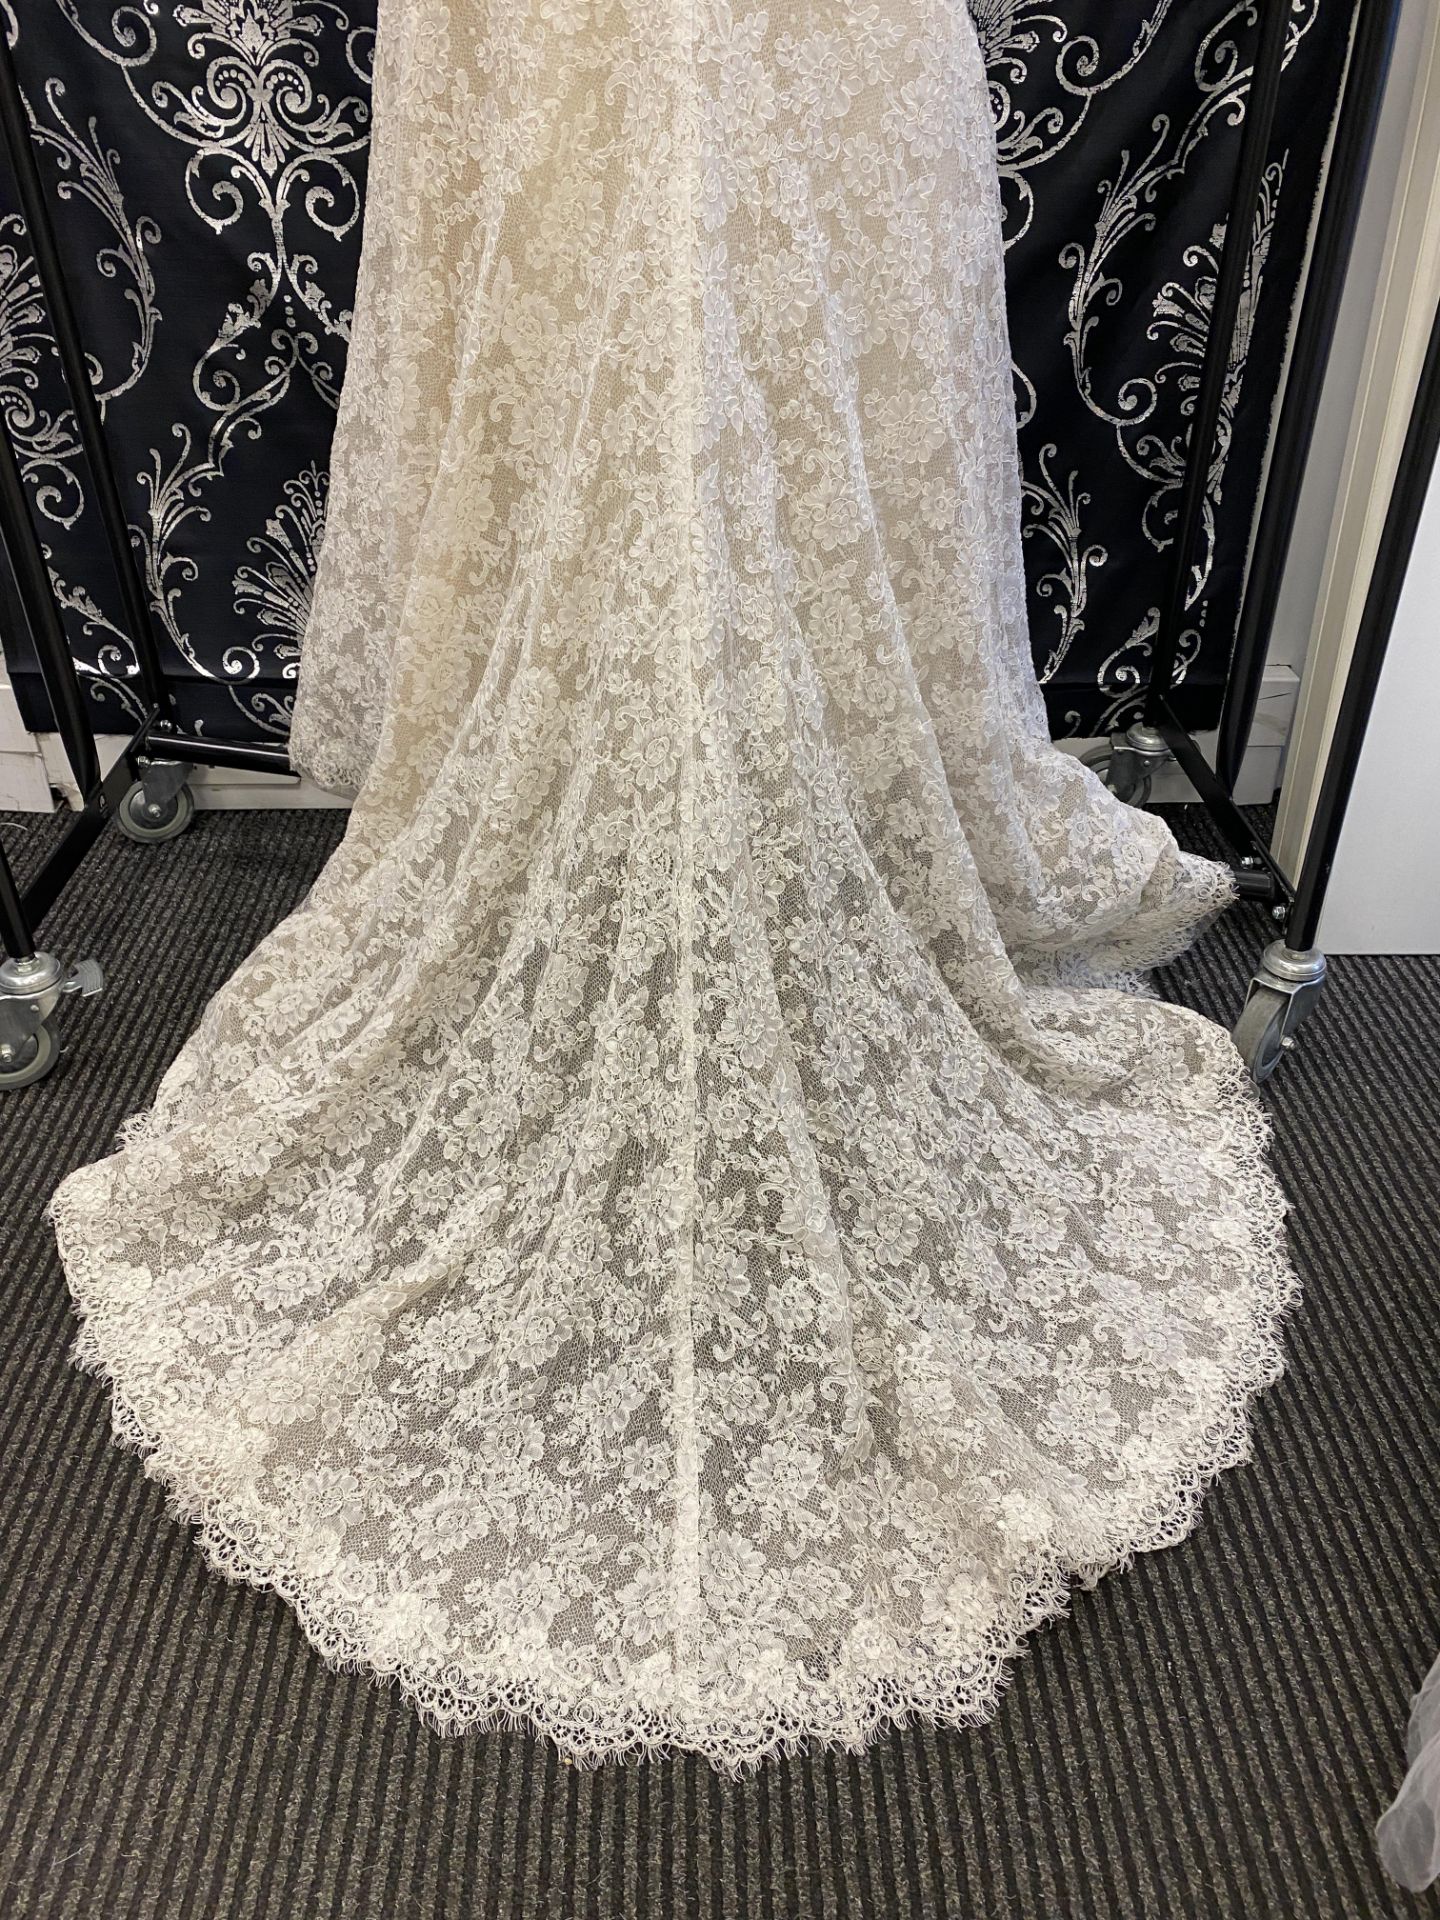 1 x ANNA SUL Y 'White Rose' Full Lace Mermaid Style Designer Wedding Dress RRP £1,250 - Image 8 of 11